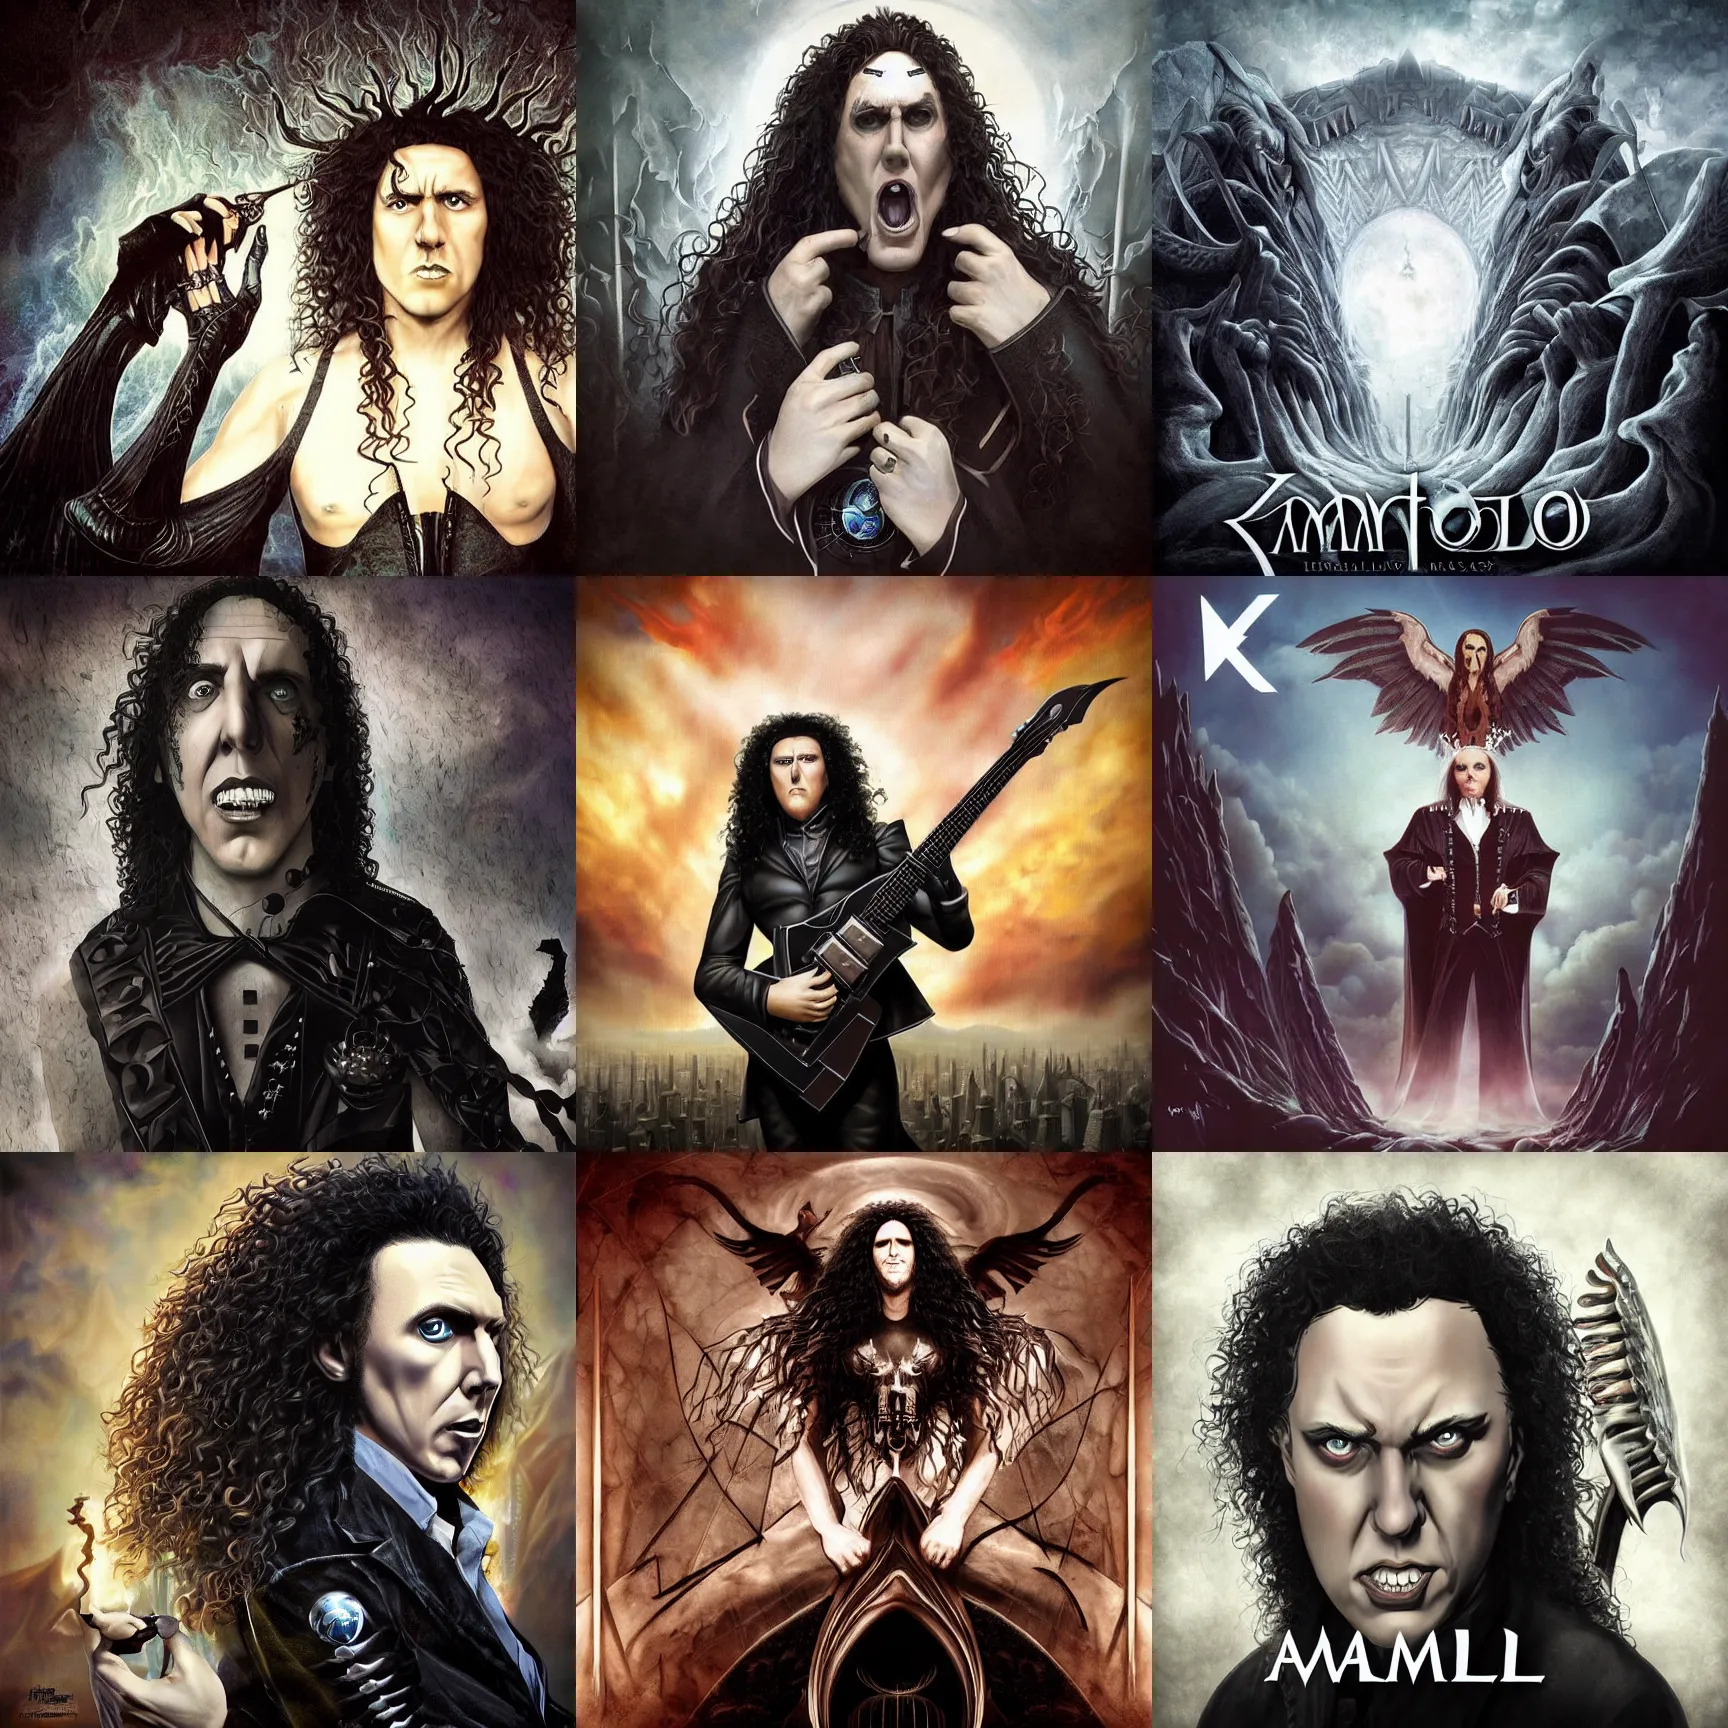 Prompt: kamelot album cover featuring photo of weird al yankovic, art by stefan heilemann, power metal album cover, gothic fantasy, trending on artstation